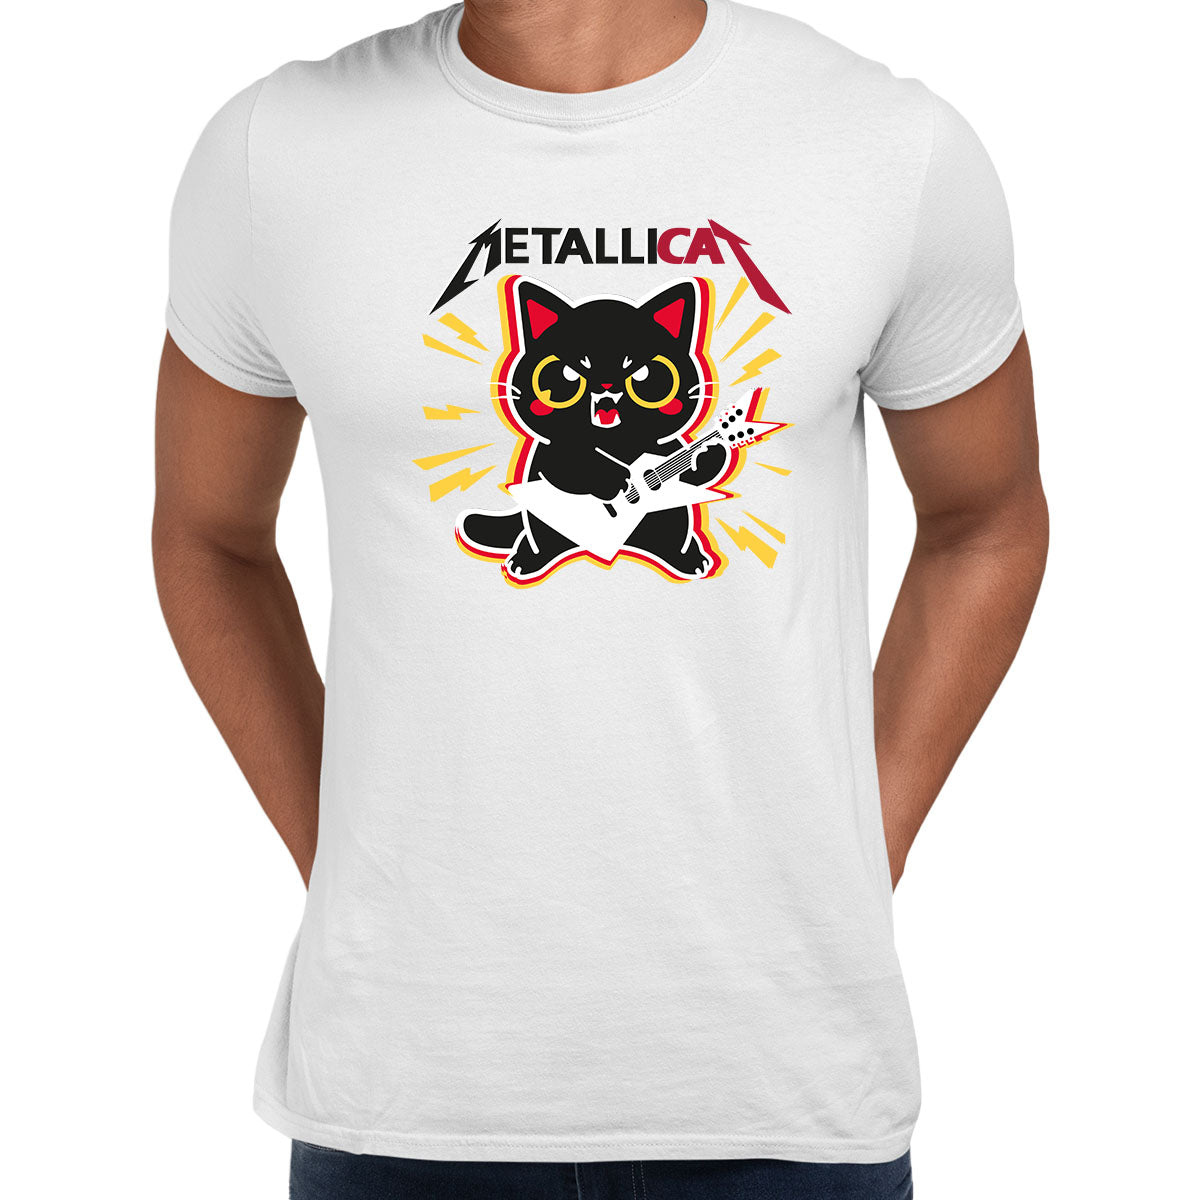 Metalicat T-shirt Funny Cat With the Guitar TV series - Kuzi Tees